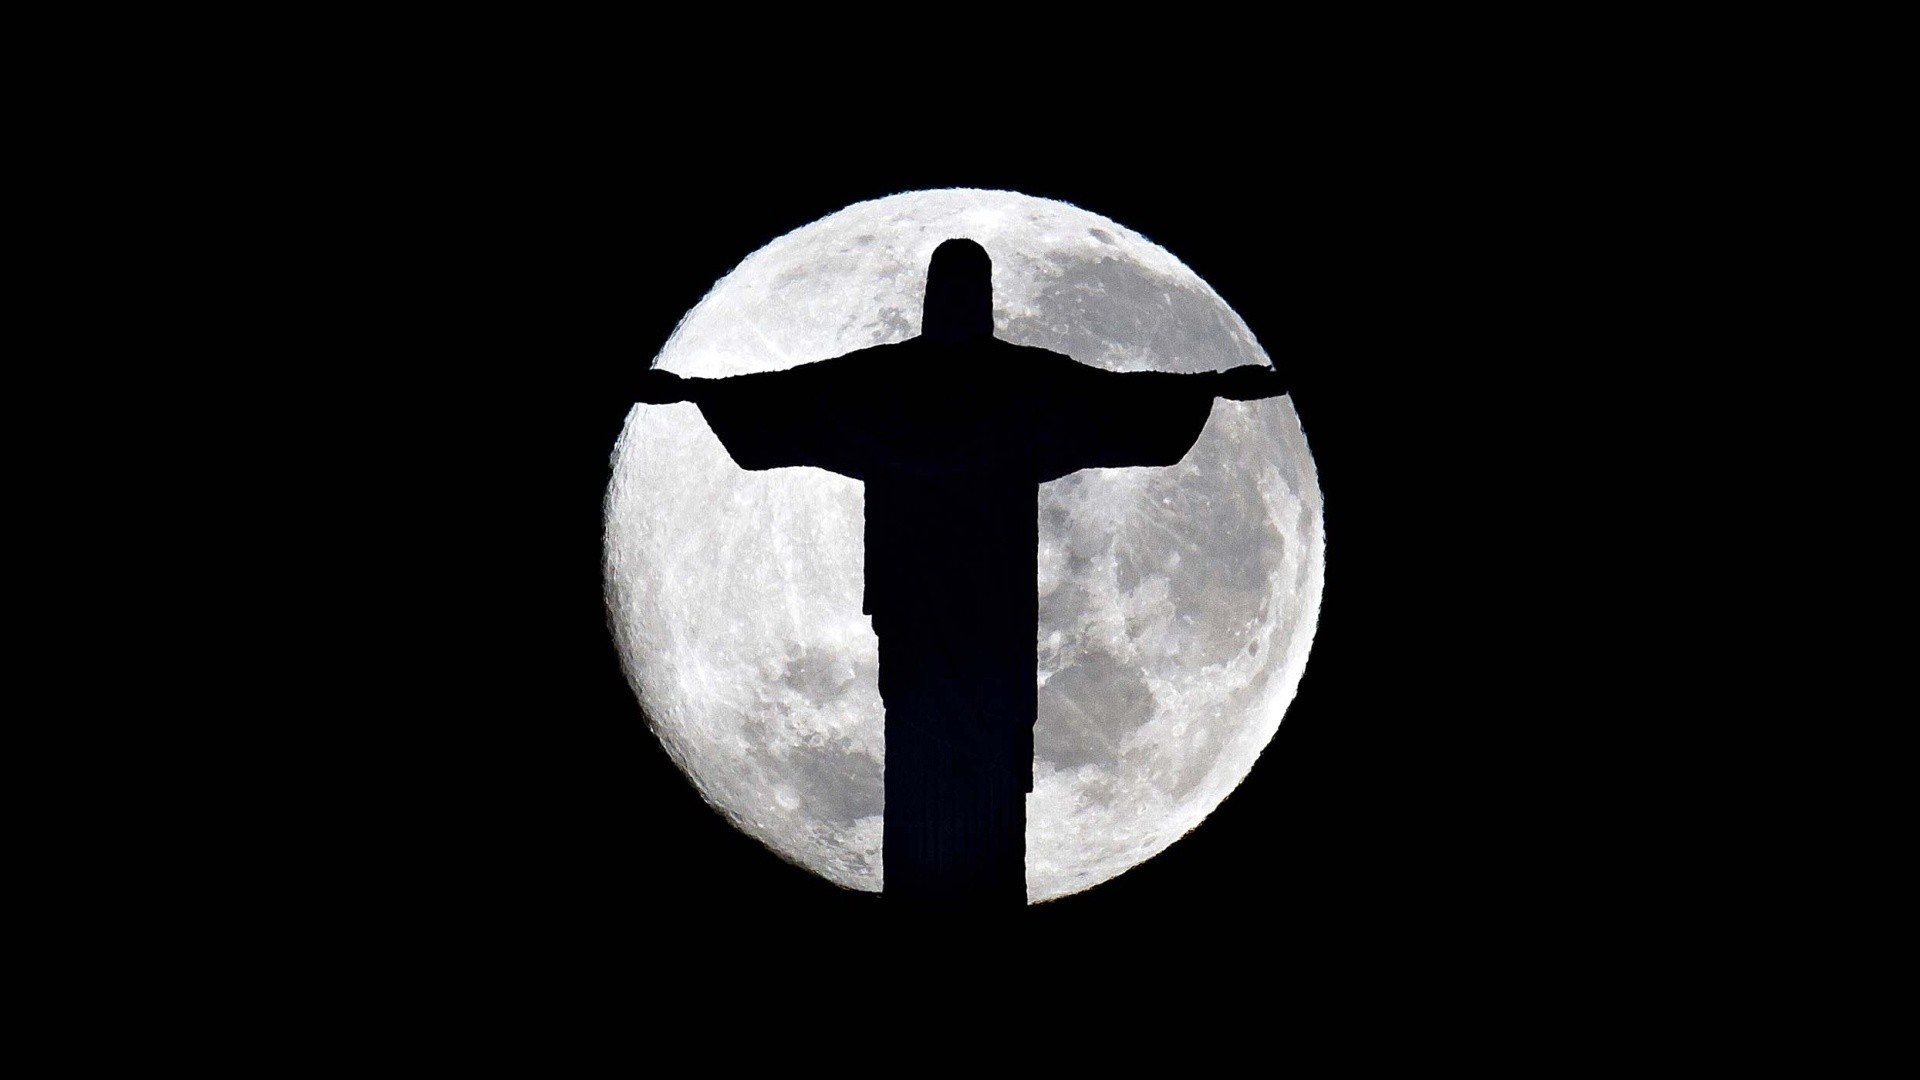 General 1920x1080 town city sculpture statue Jesus Christ Rio de Janeiro Brazil Christ the Redeemer Moon moonlight silhouette religious Christianity black background night religion